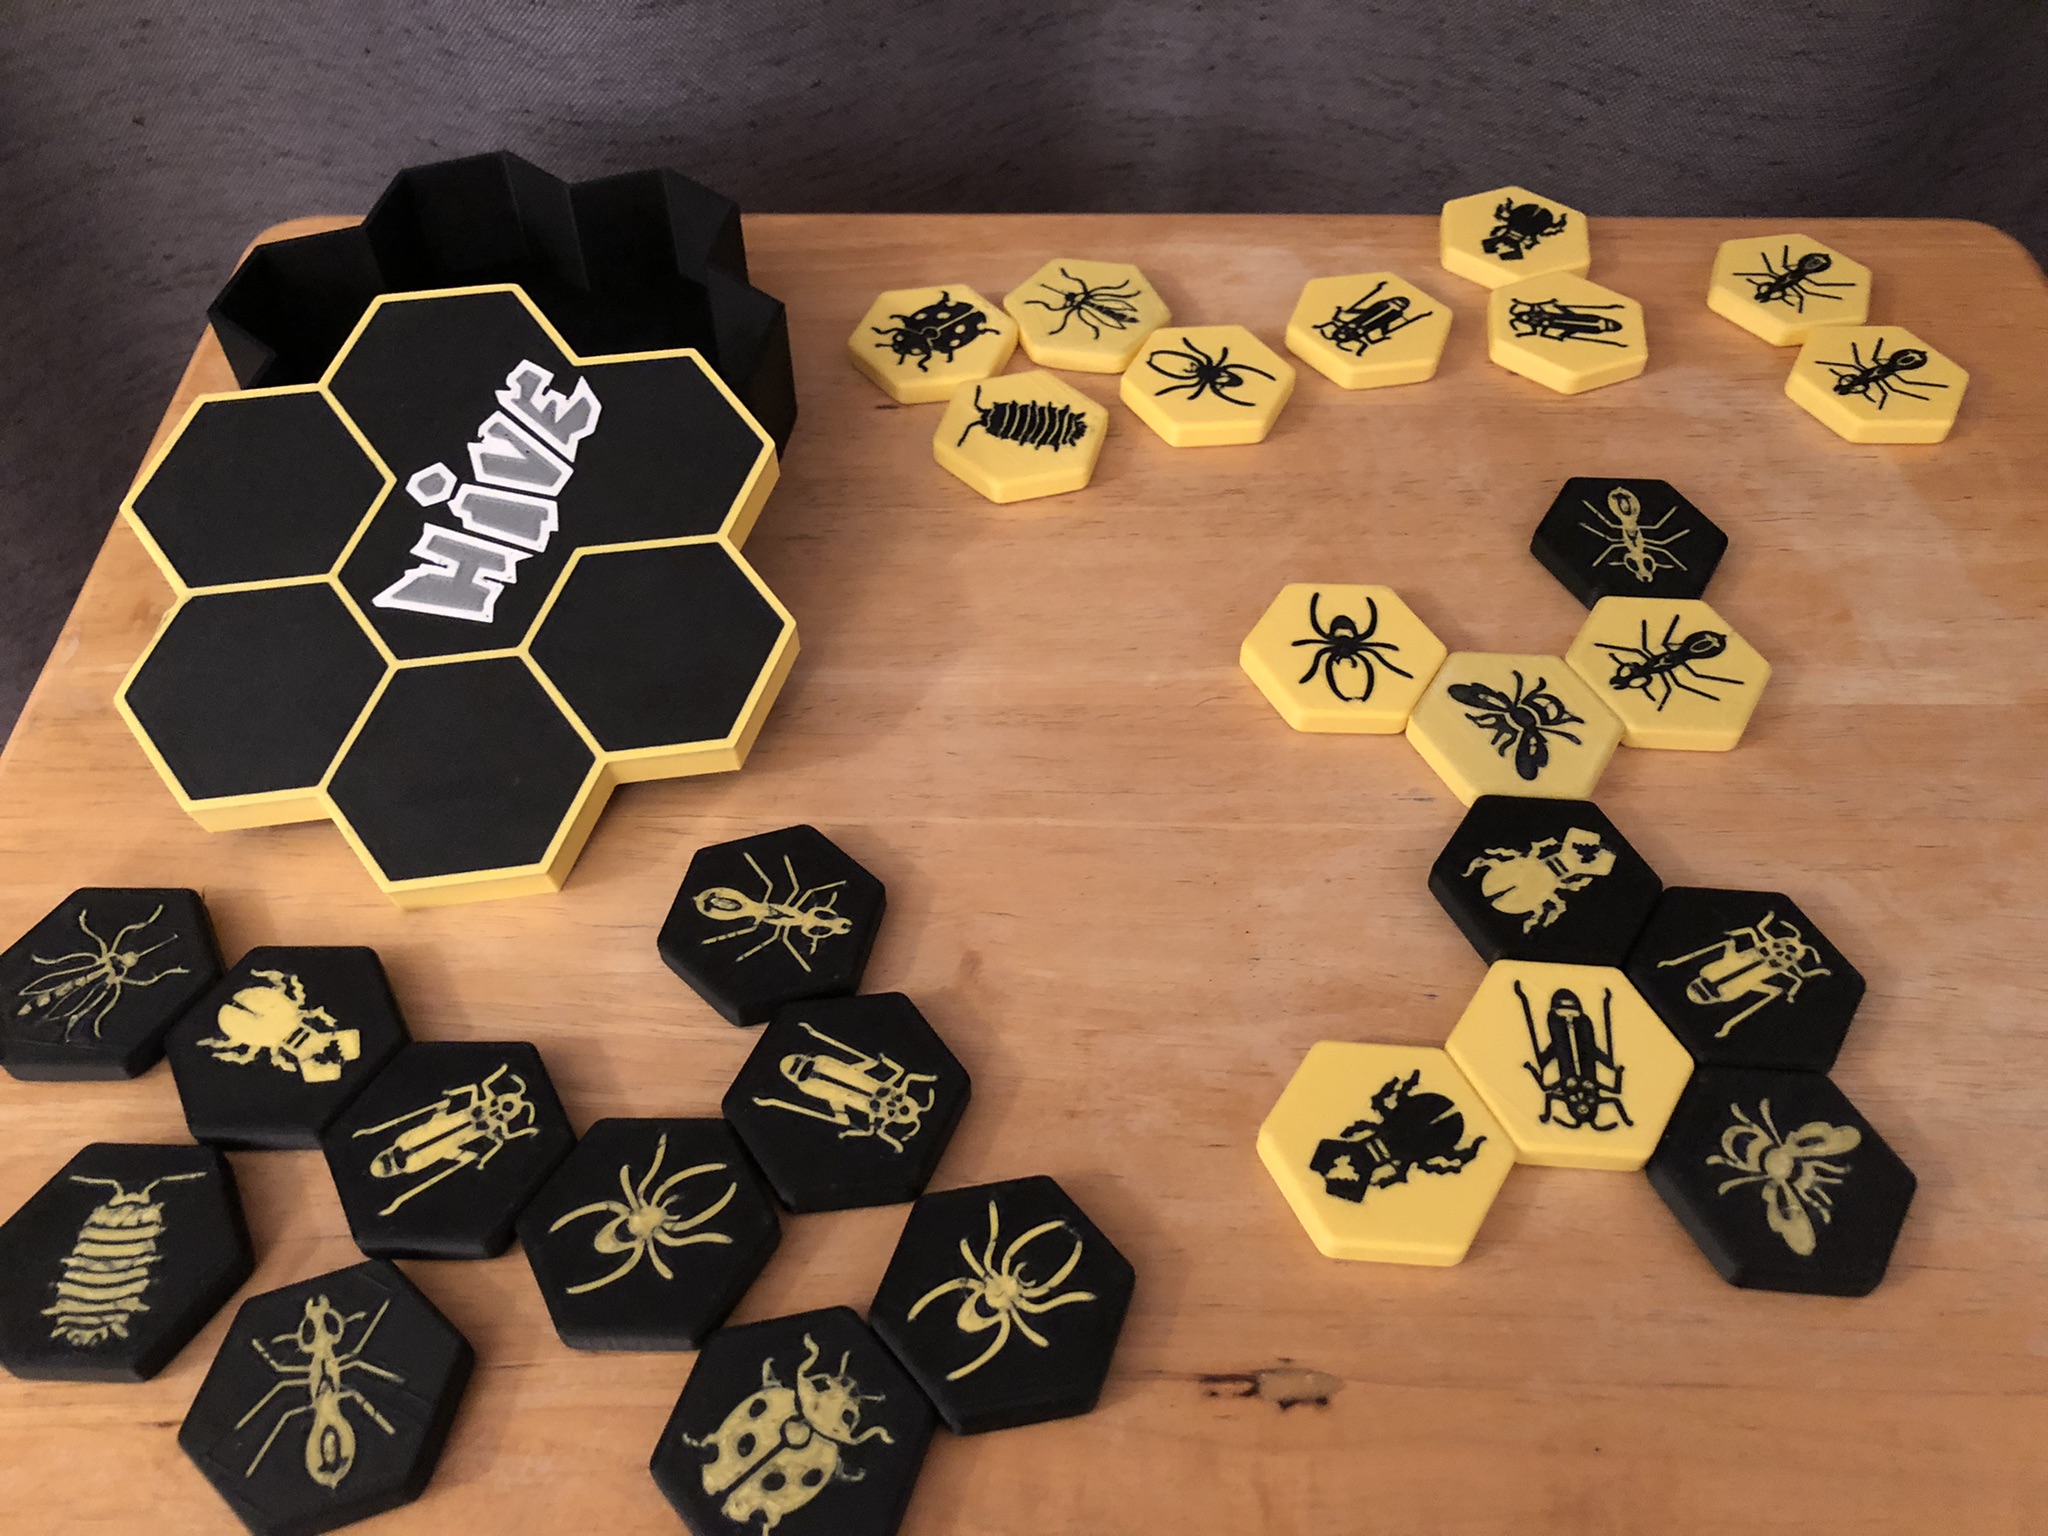 Hive - Complete Board Game